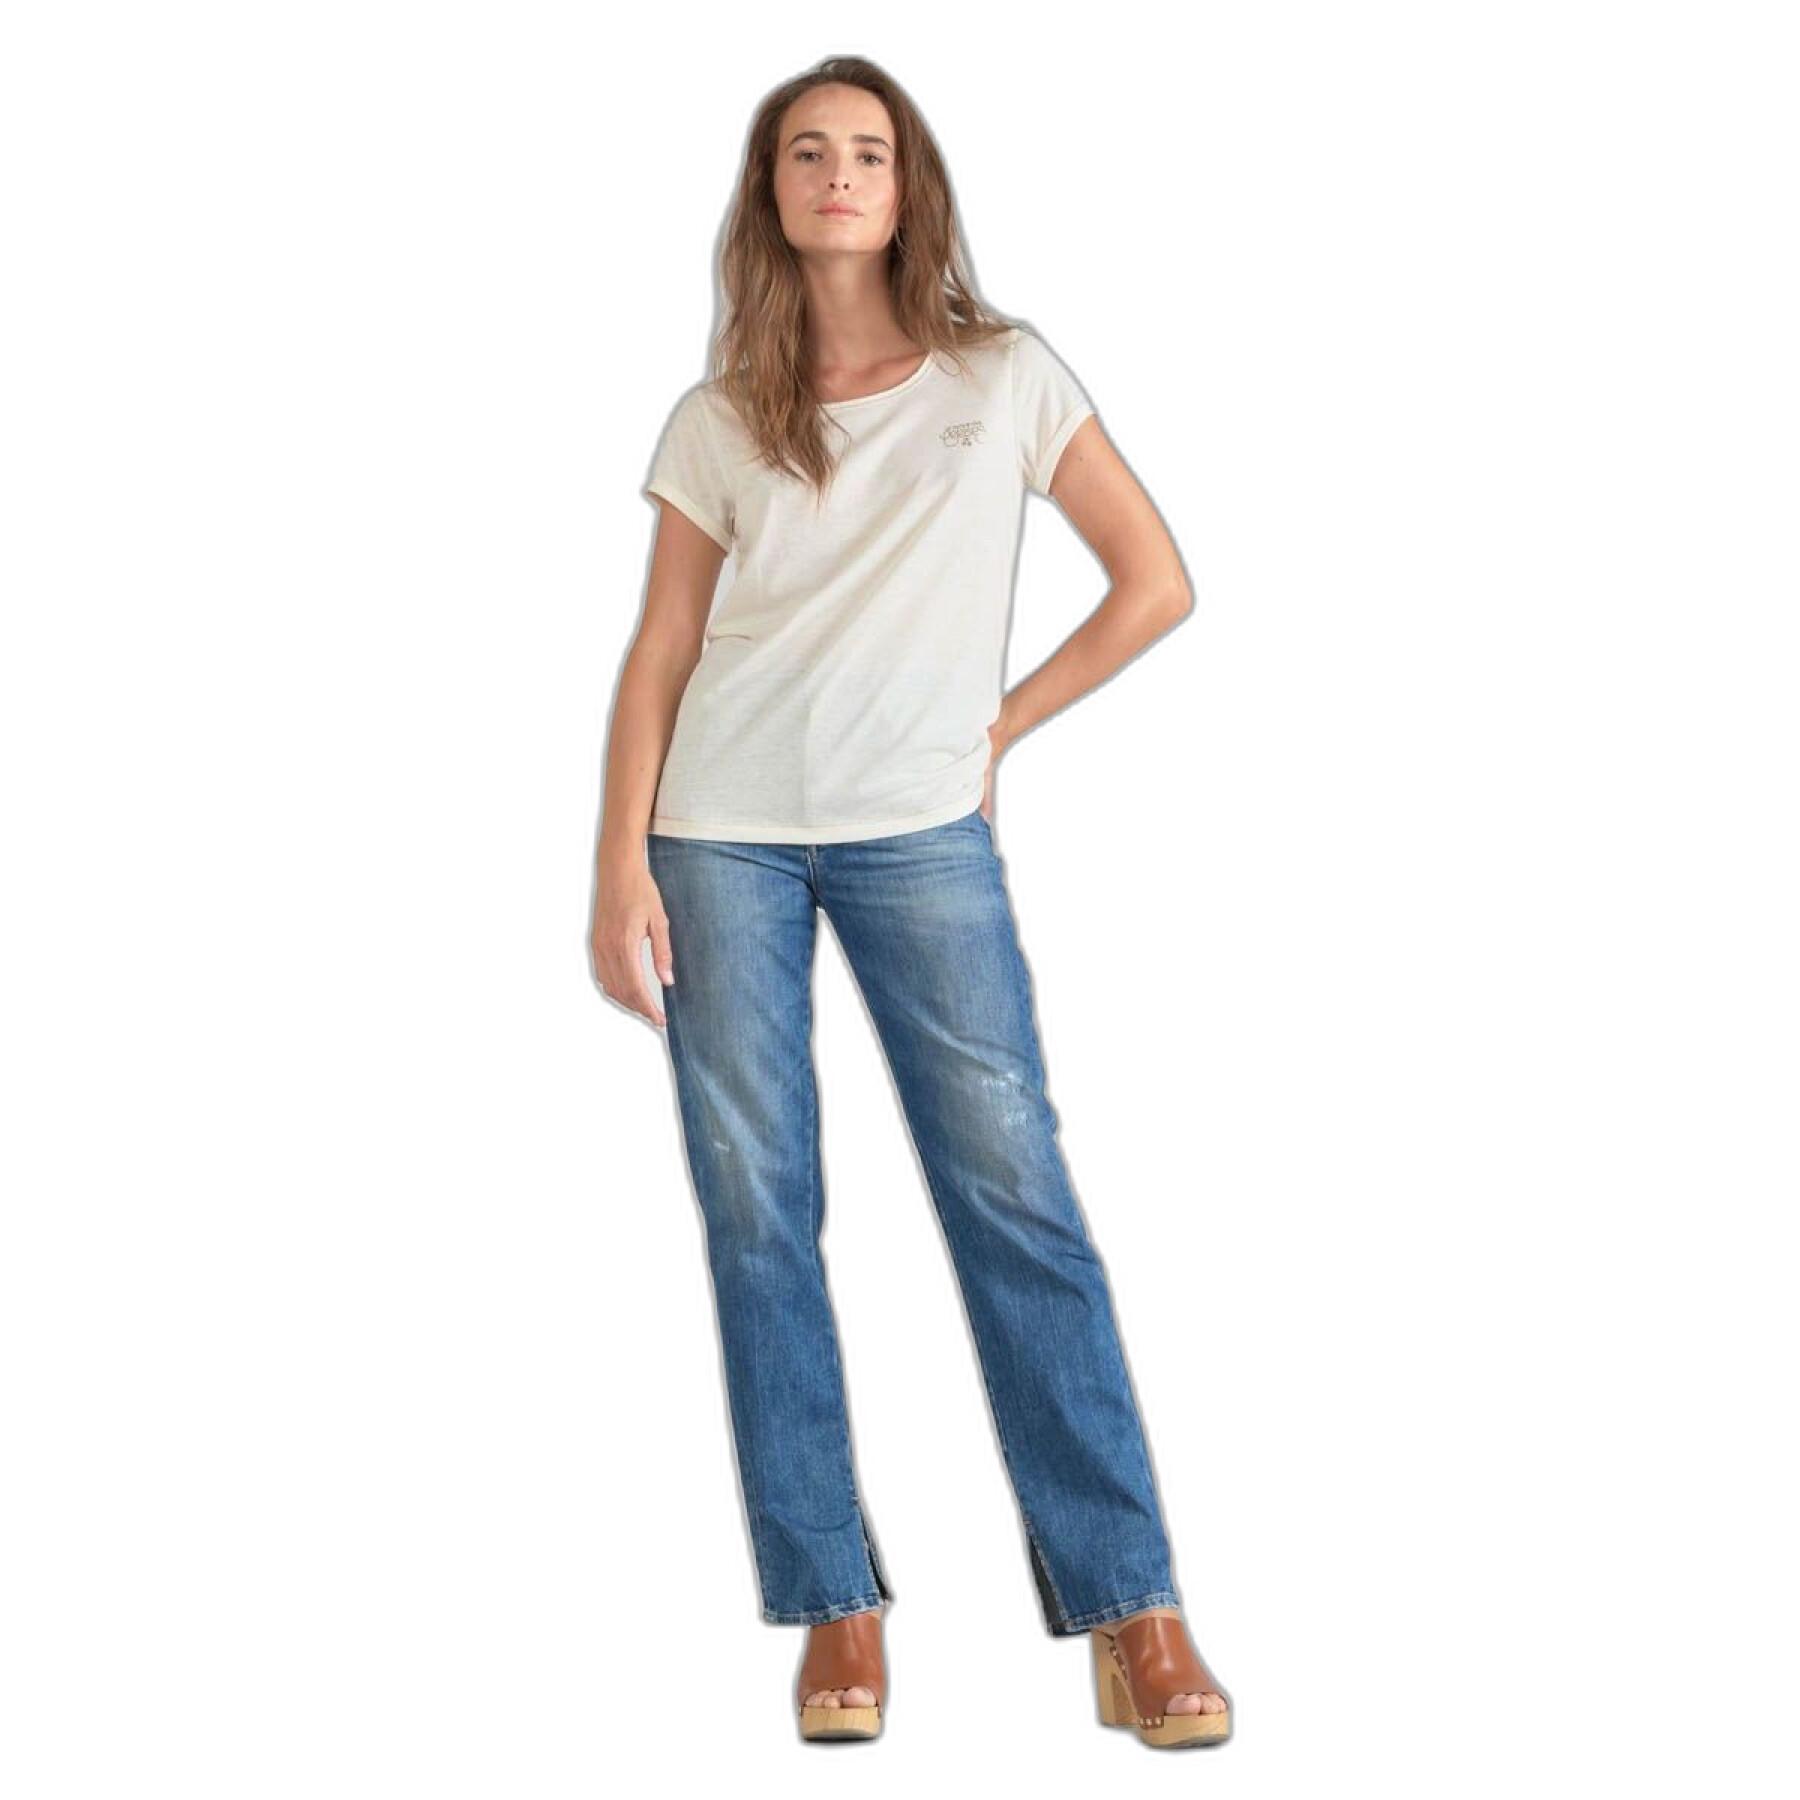 Lifestyle Woman T-shirt T-shirts cerises tank and - Temps Smallvtrame - - Women\'s Le tops des